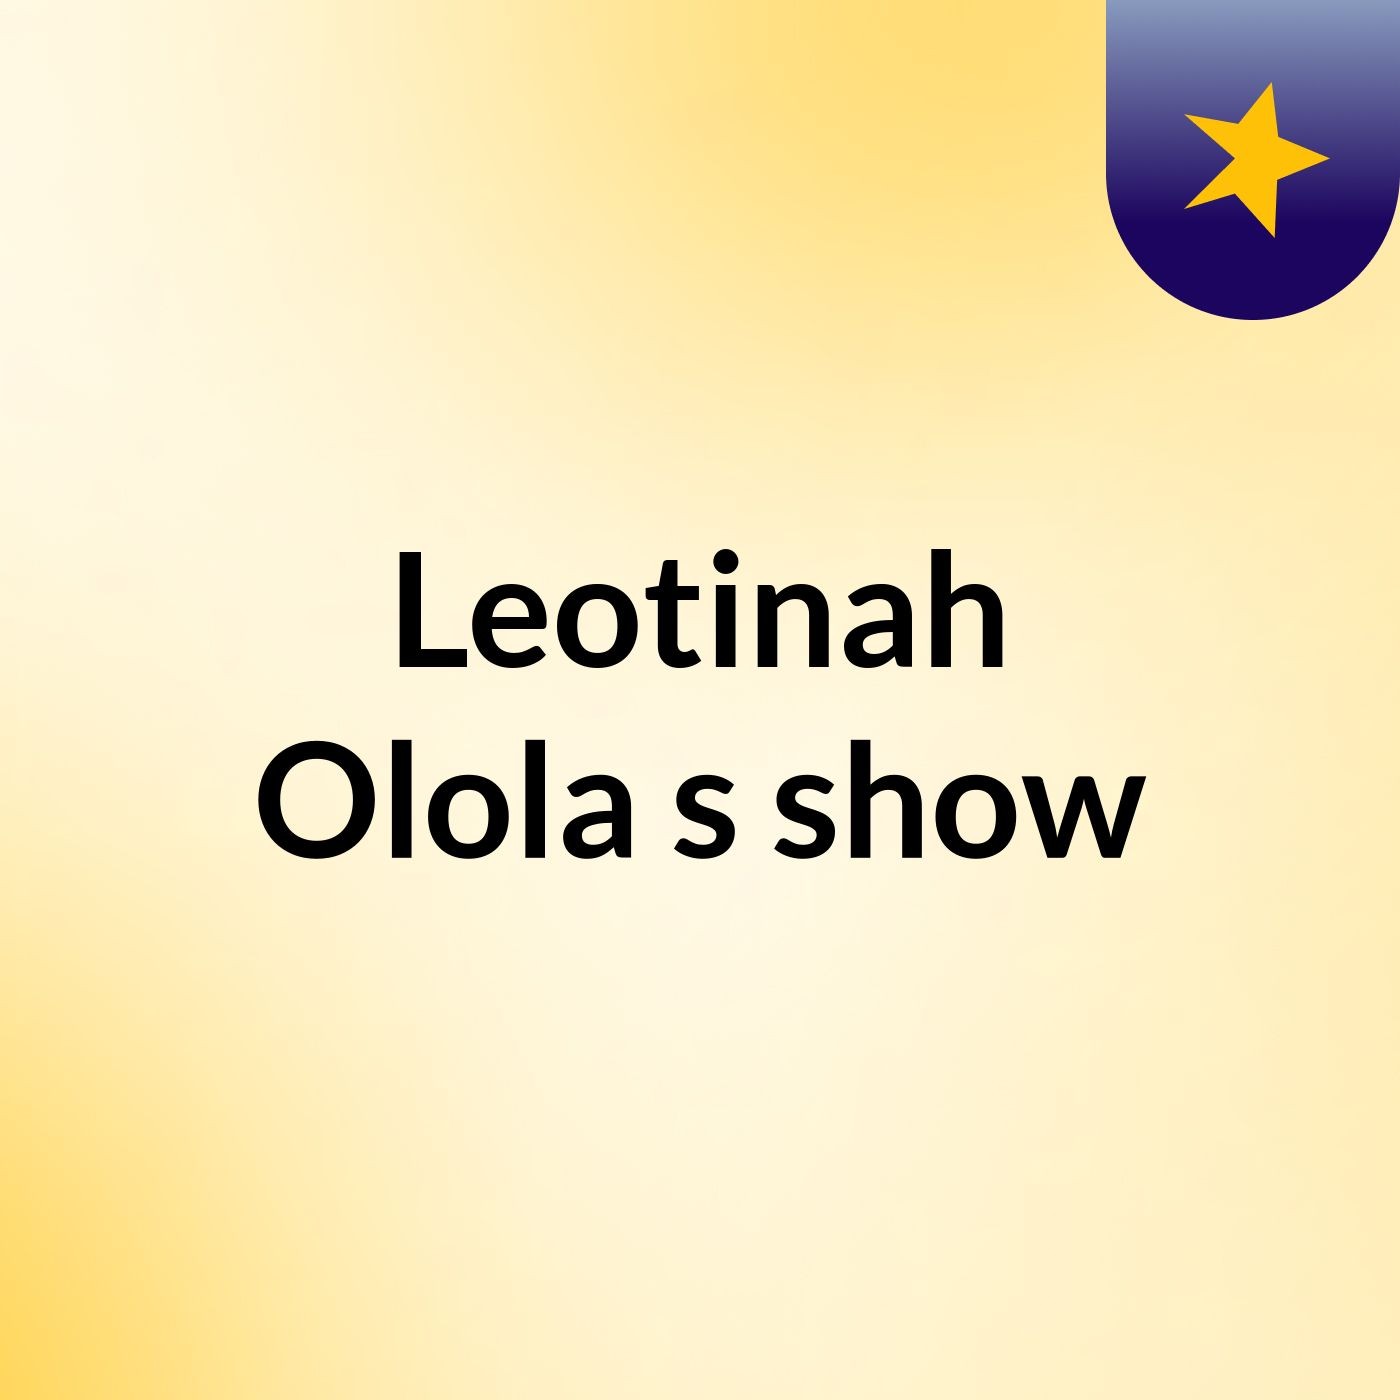 Leotinah Olola's show